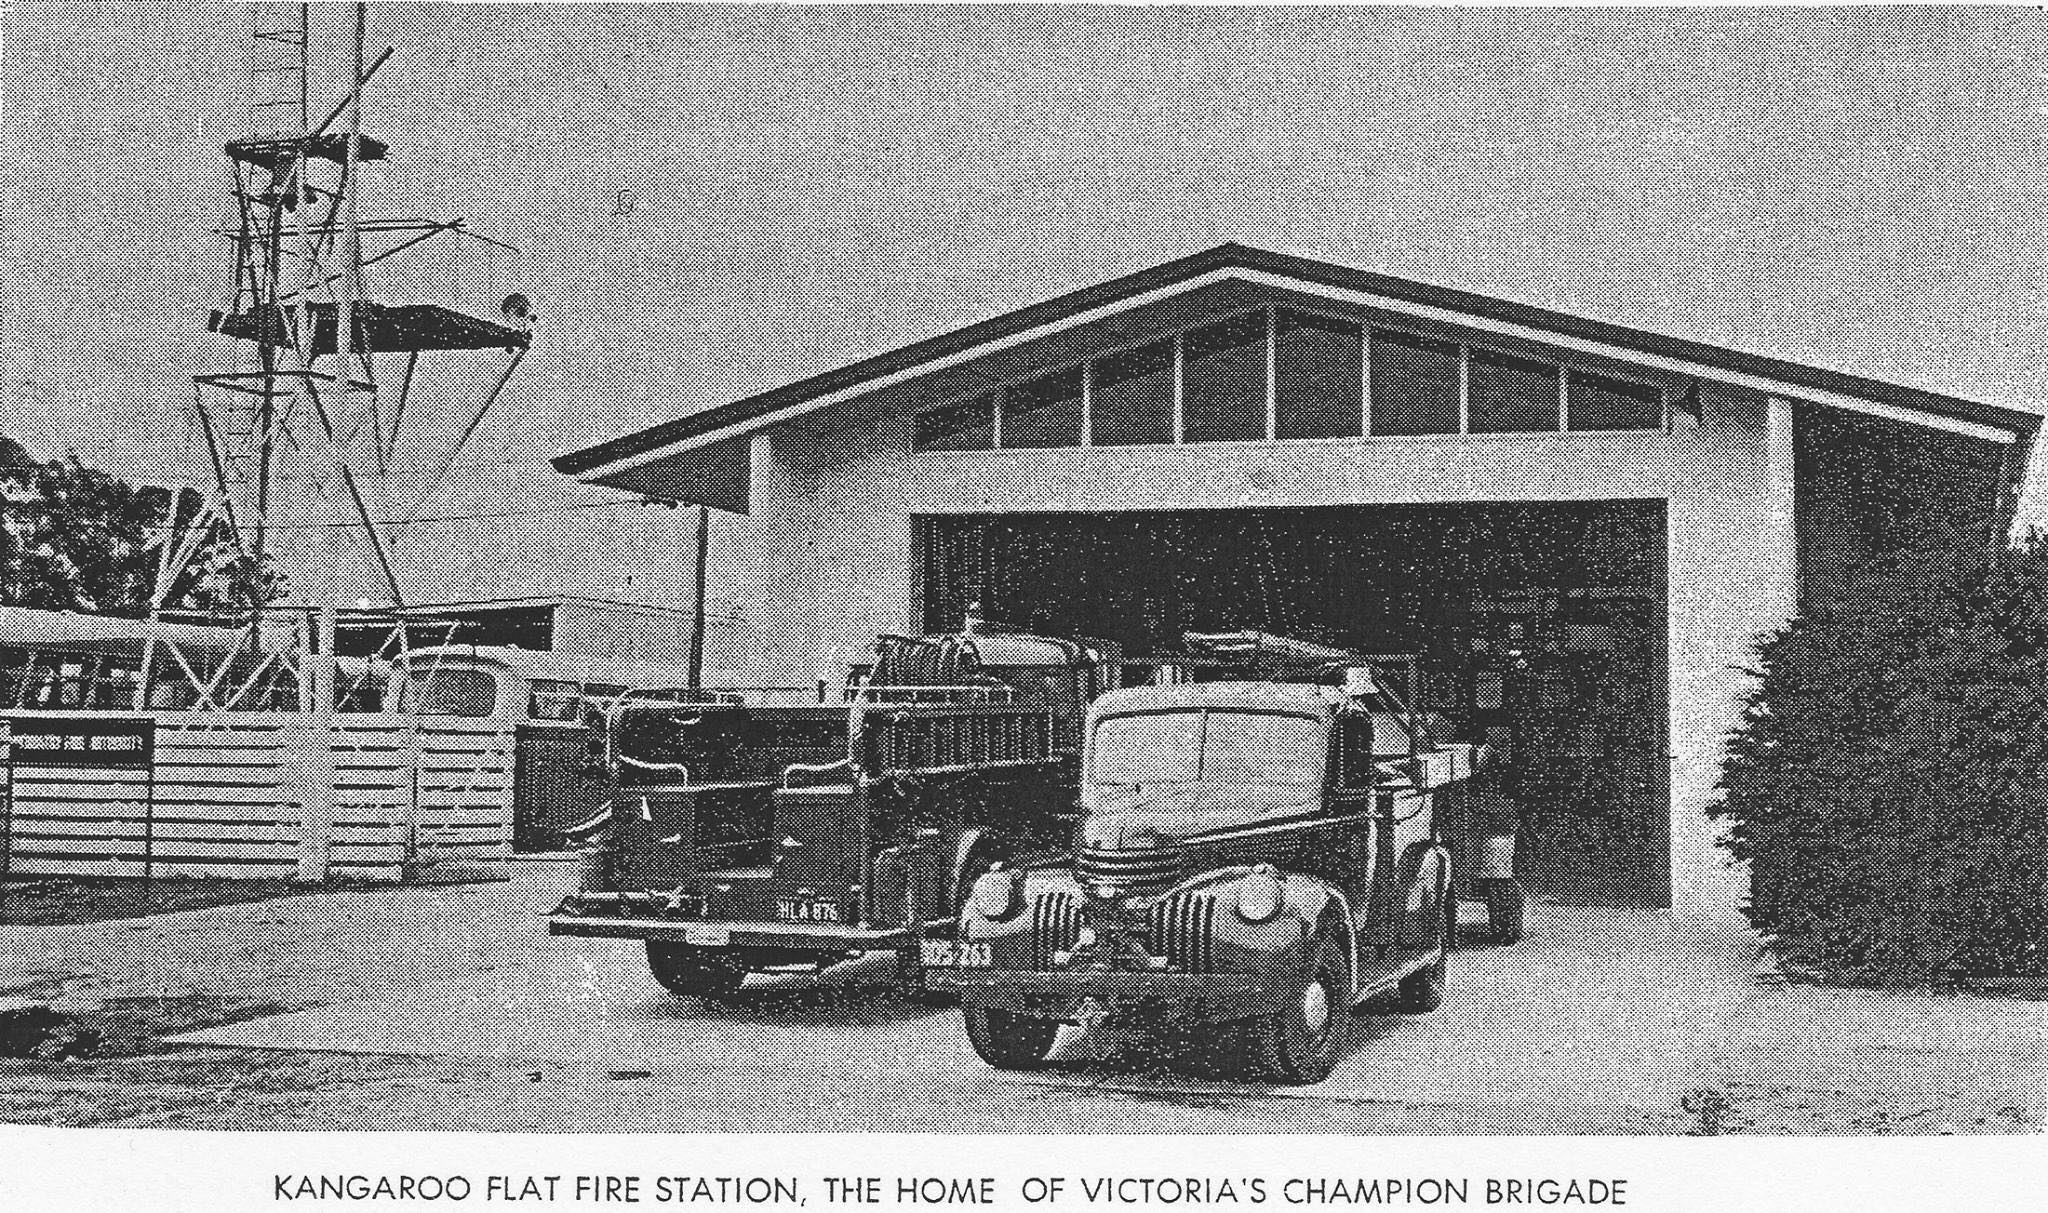 Kangaroo Flat Fire Station circa 1960s